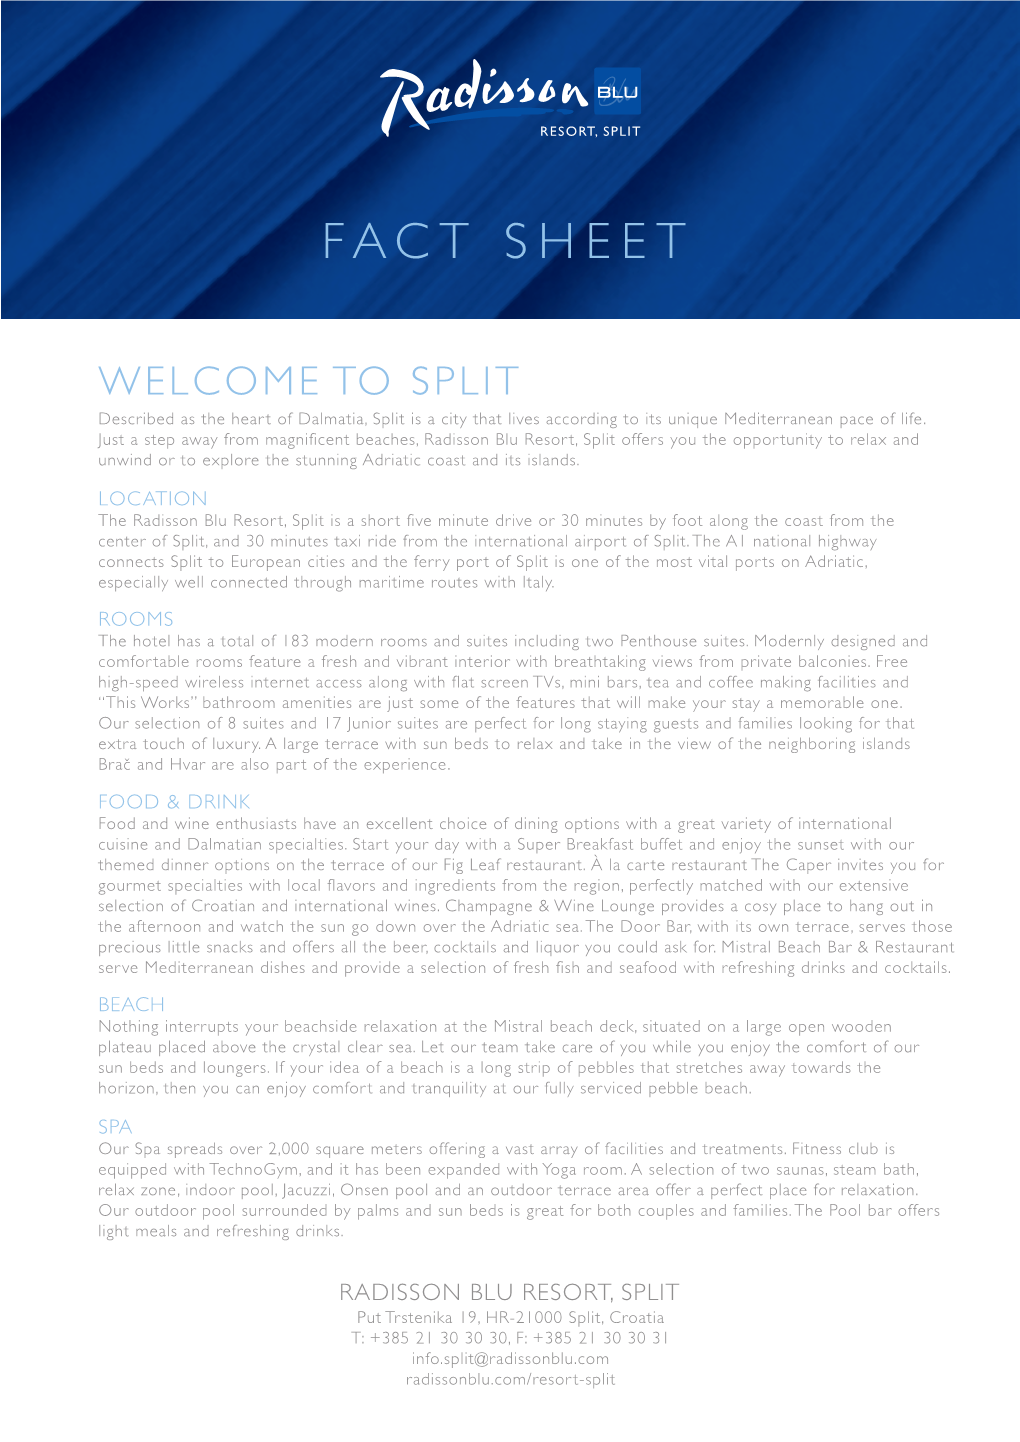 Rdblu Split 2017 Hotel Fact Sheet